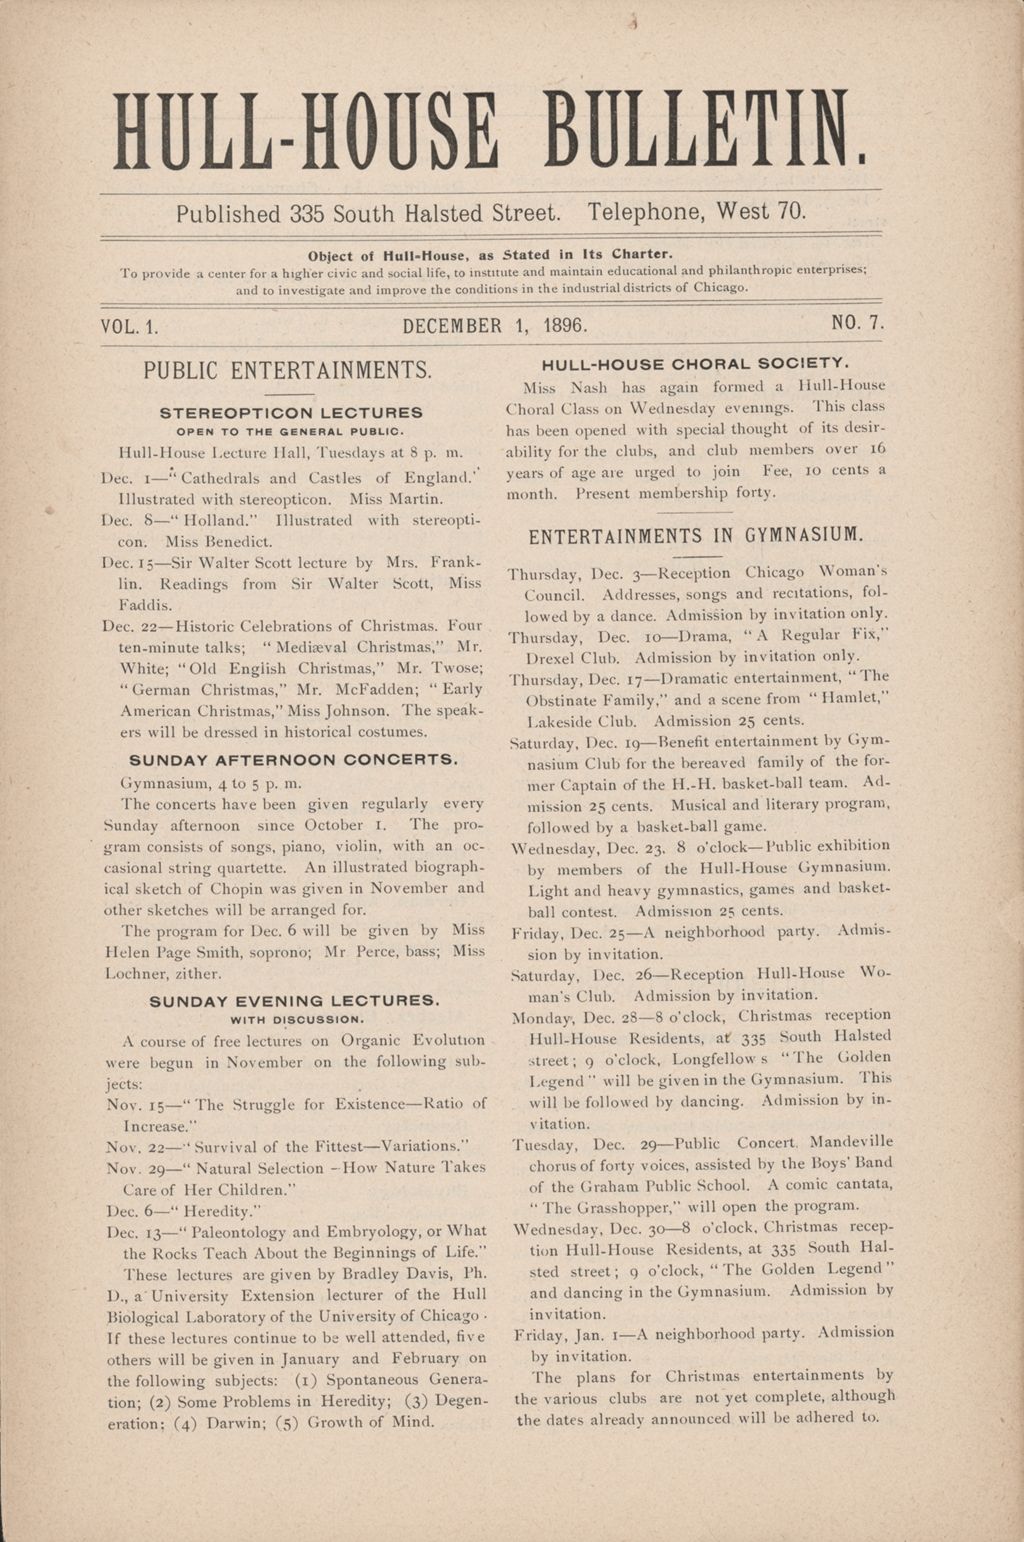 Hull-House Bulletin, vol. 1, no. 7, 1896: Dec. 1